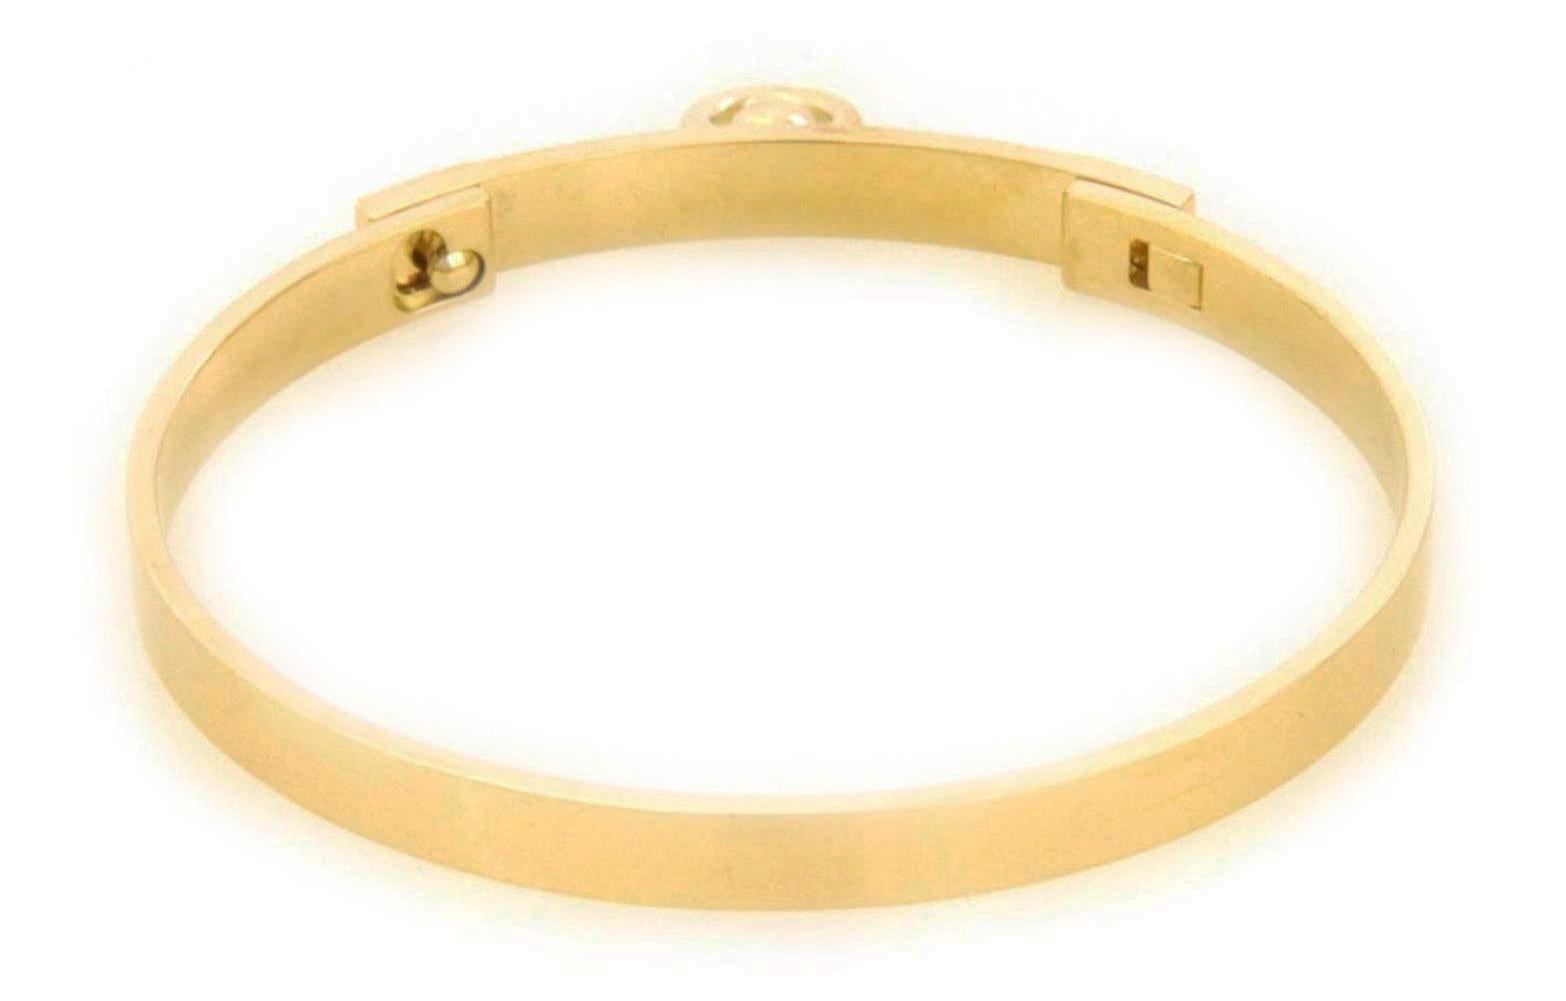 Hermes Collier de Chien 18k Gelbgold Armspange Armband (Moderne) im Angebot